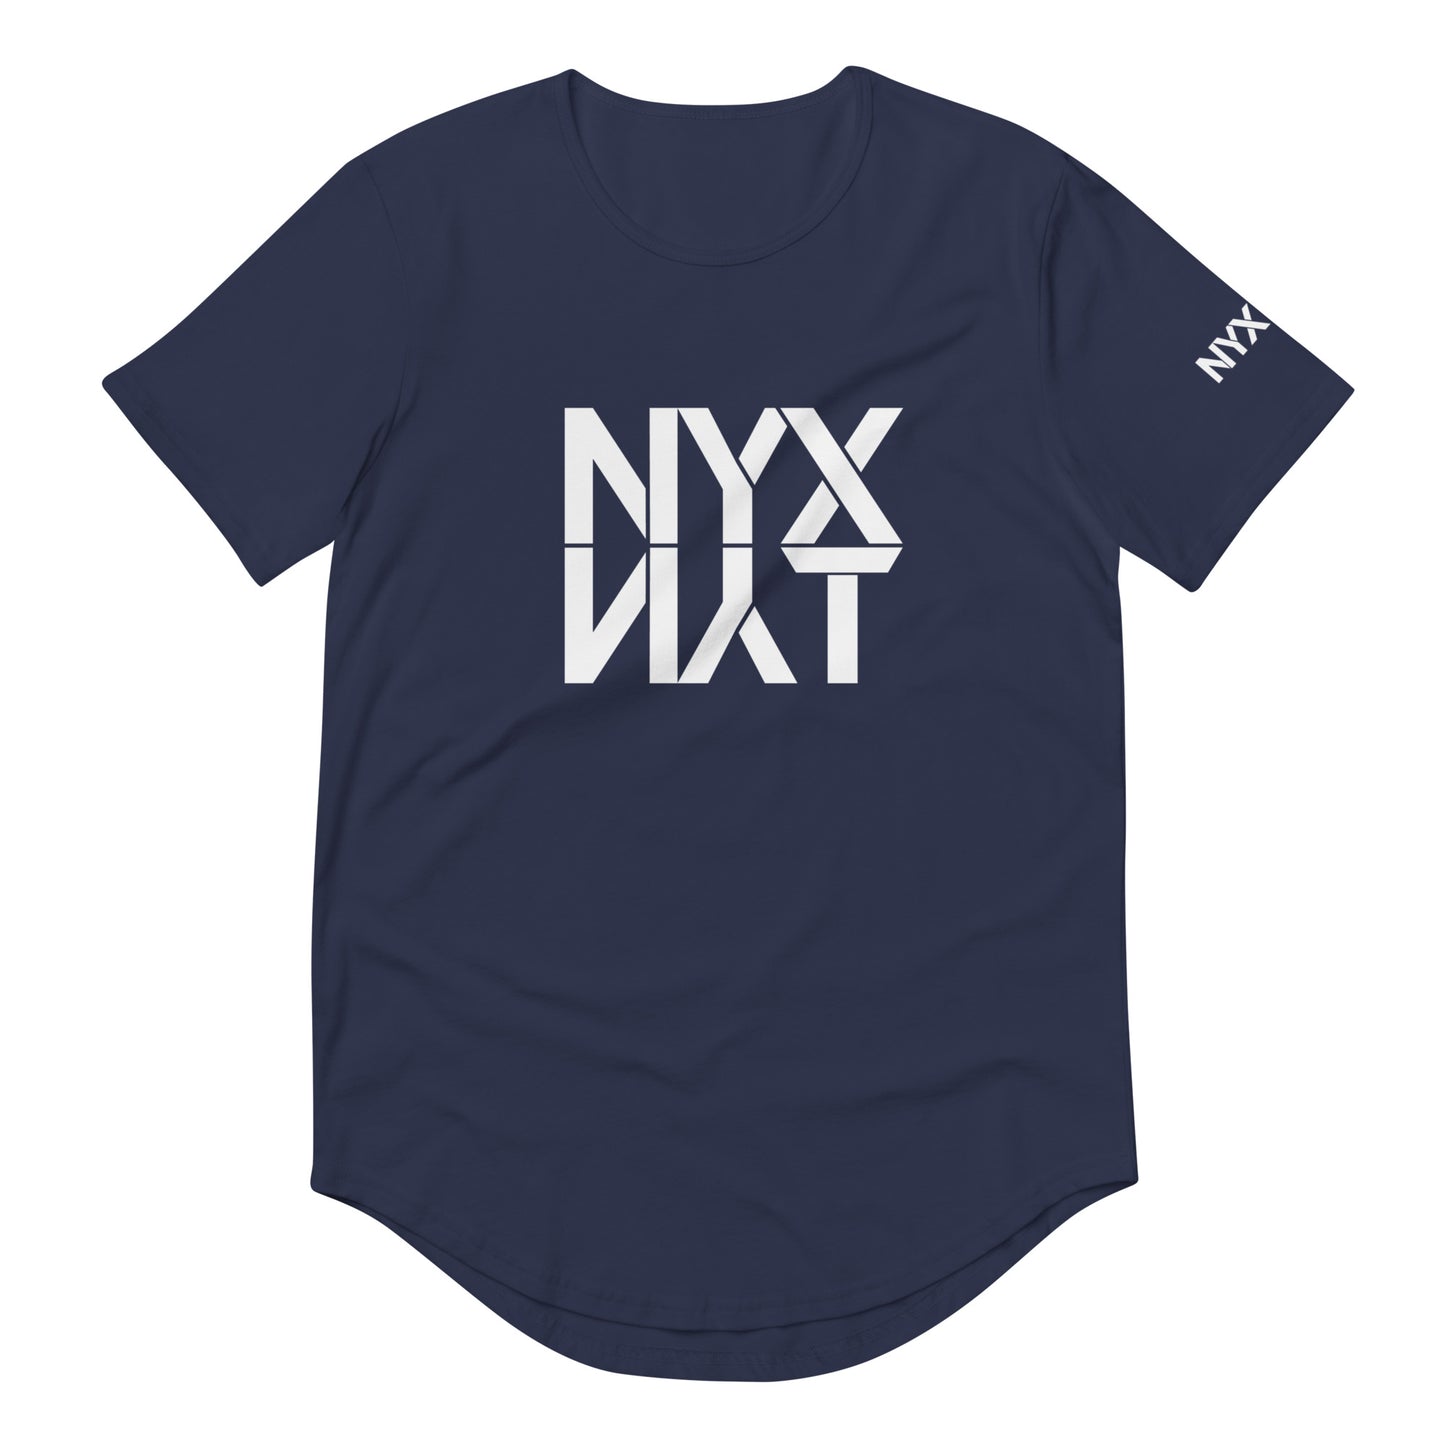 NYX NYT Men's Curved Hem T-Shirt